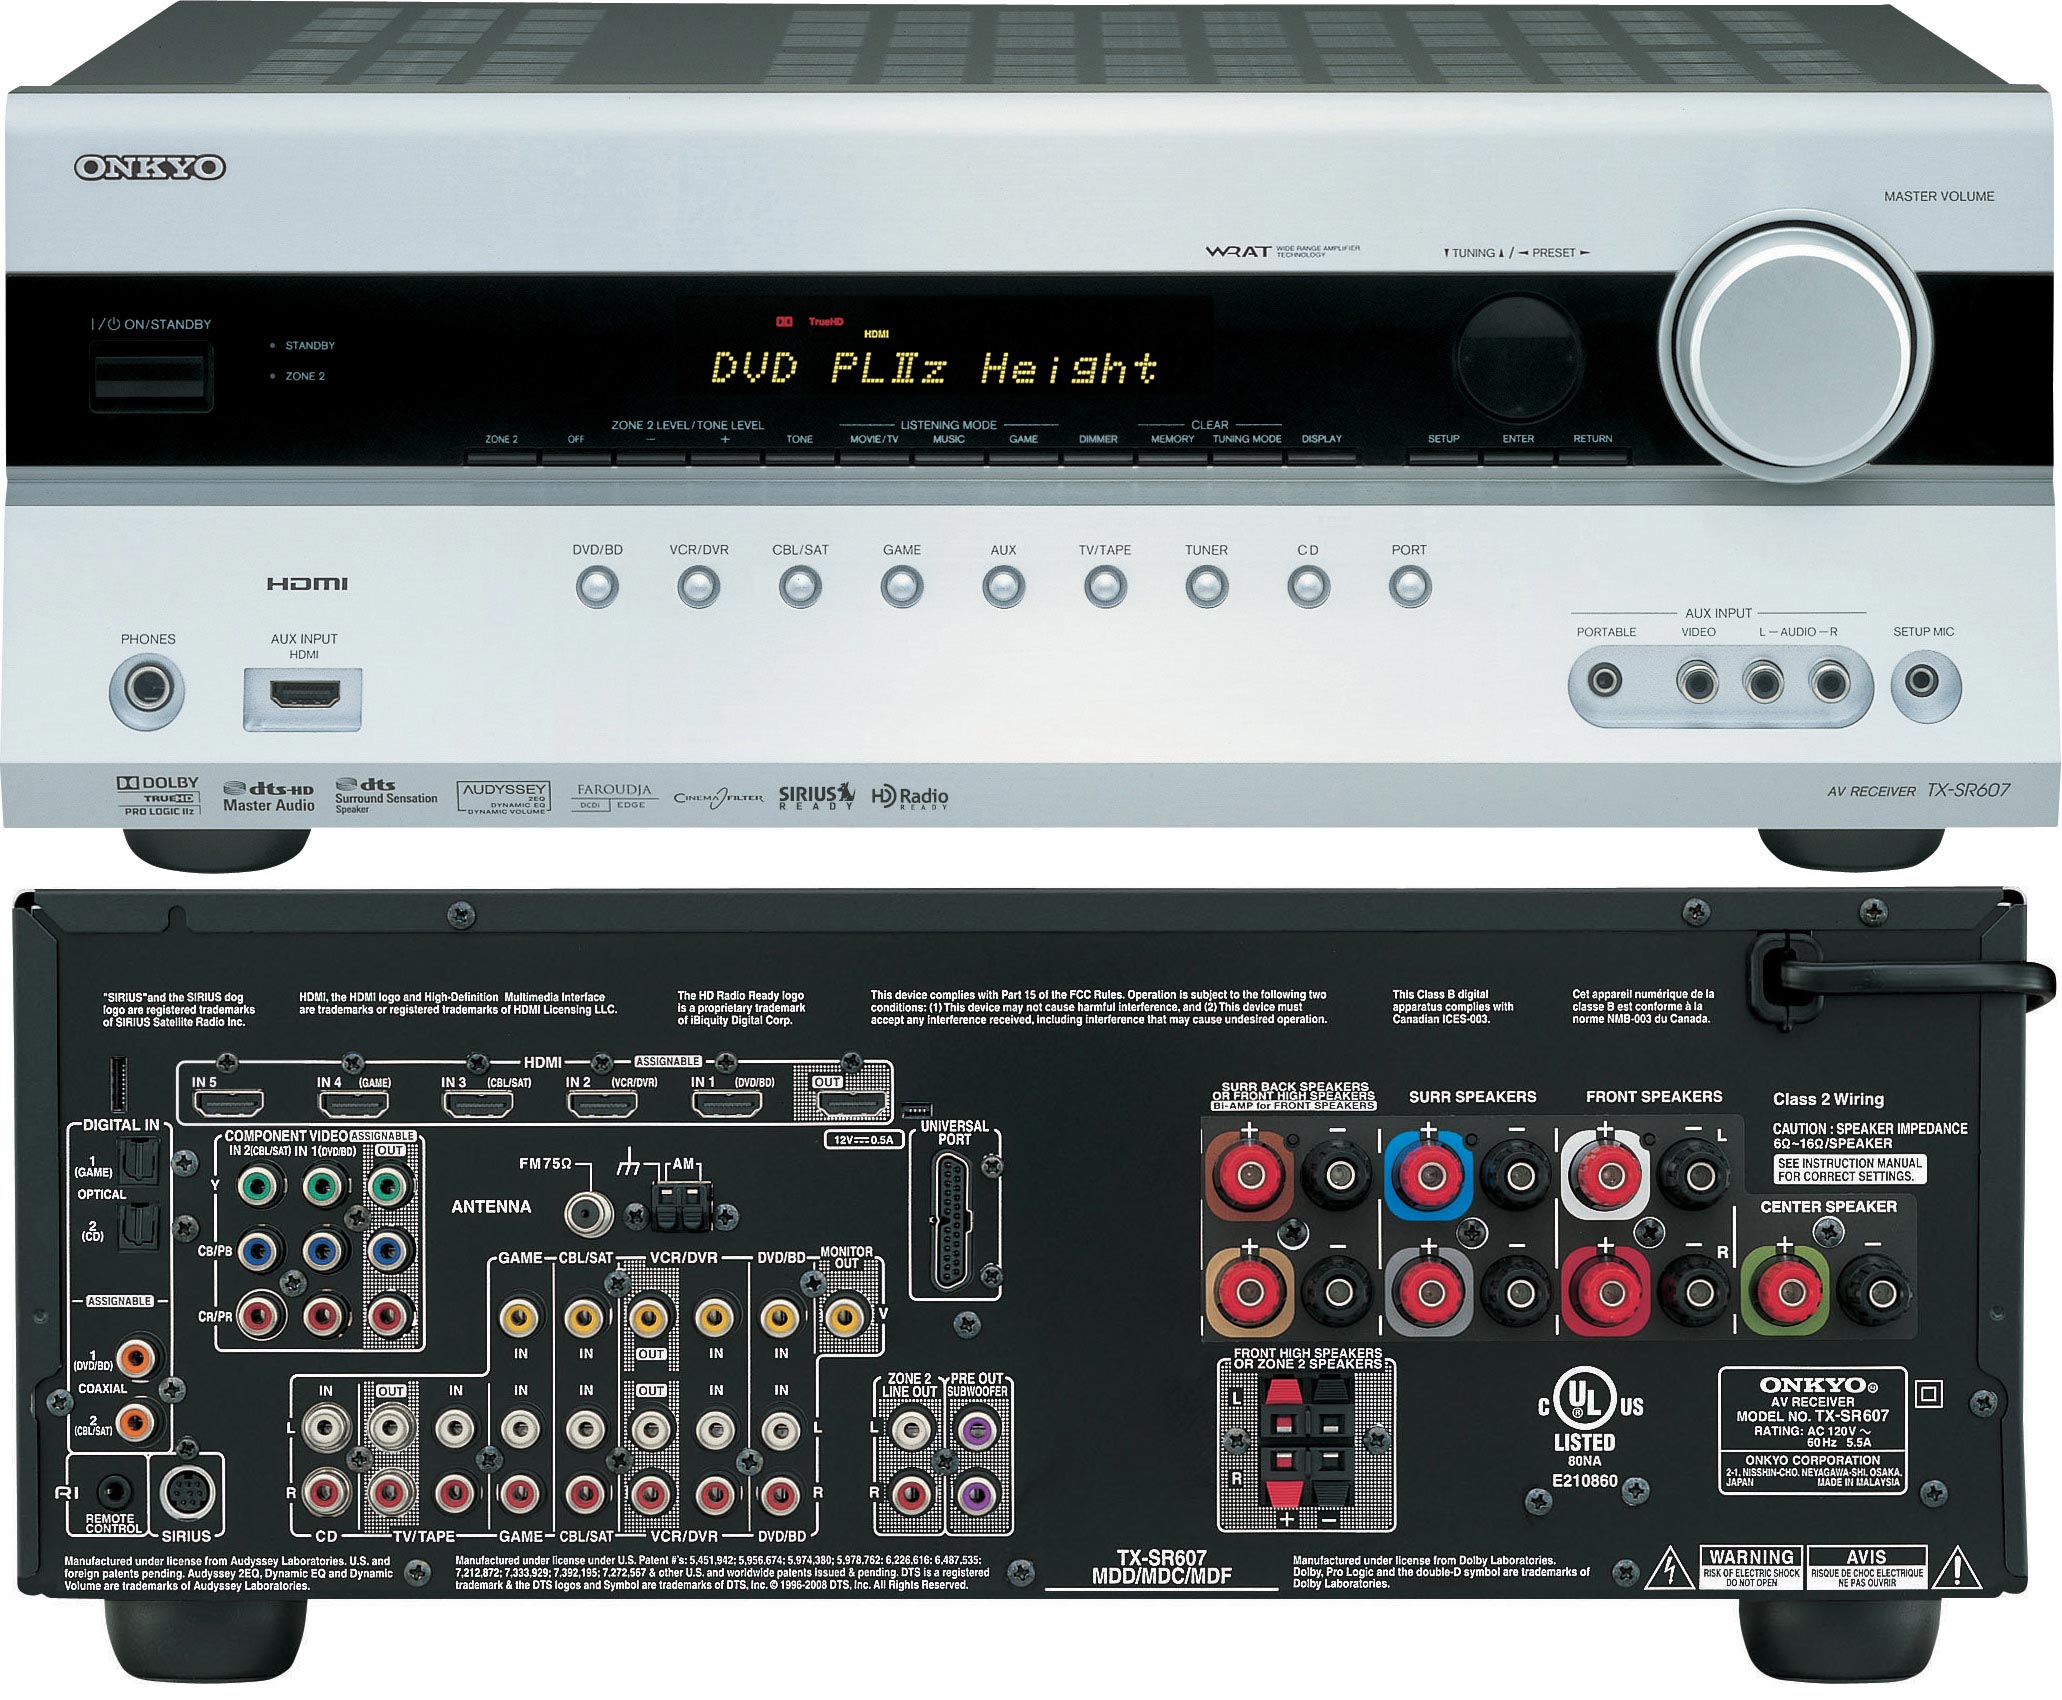 Onkyo TX-SR607 with Dolby PLIIz | Audioholics